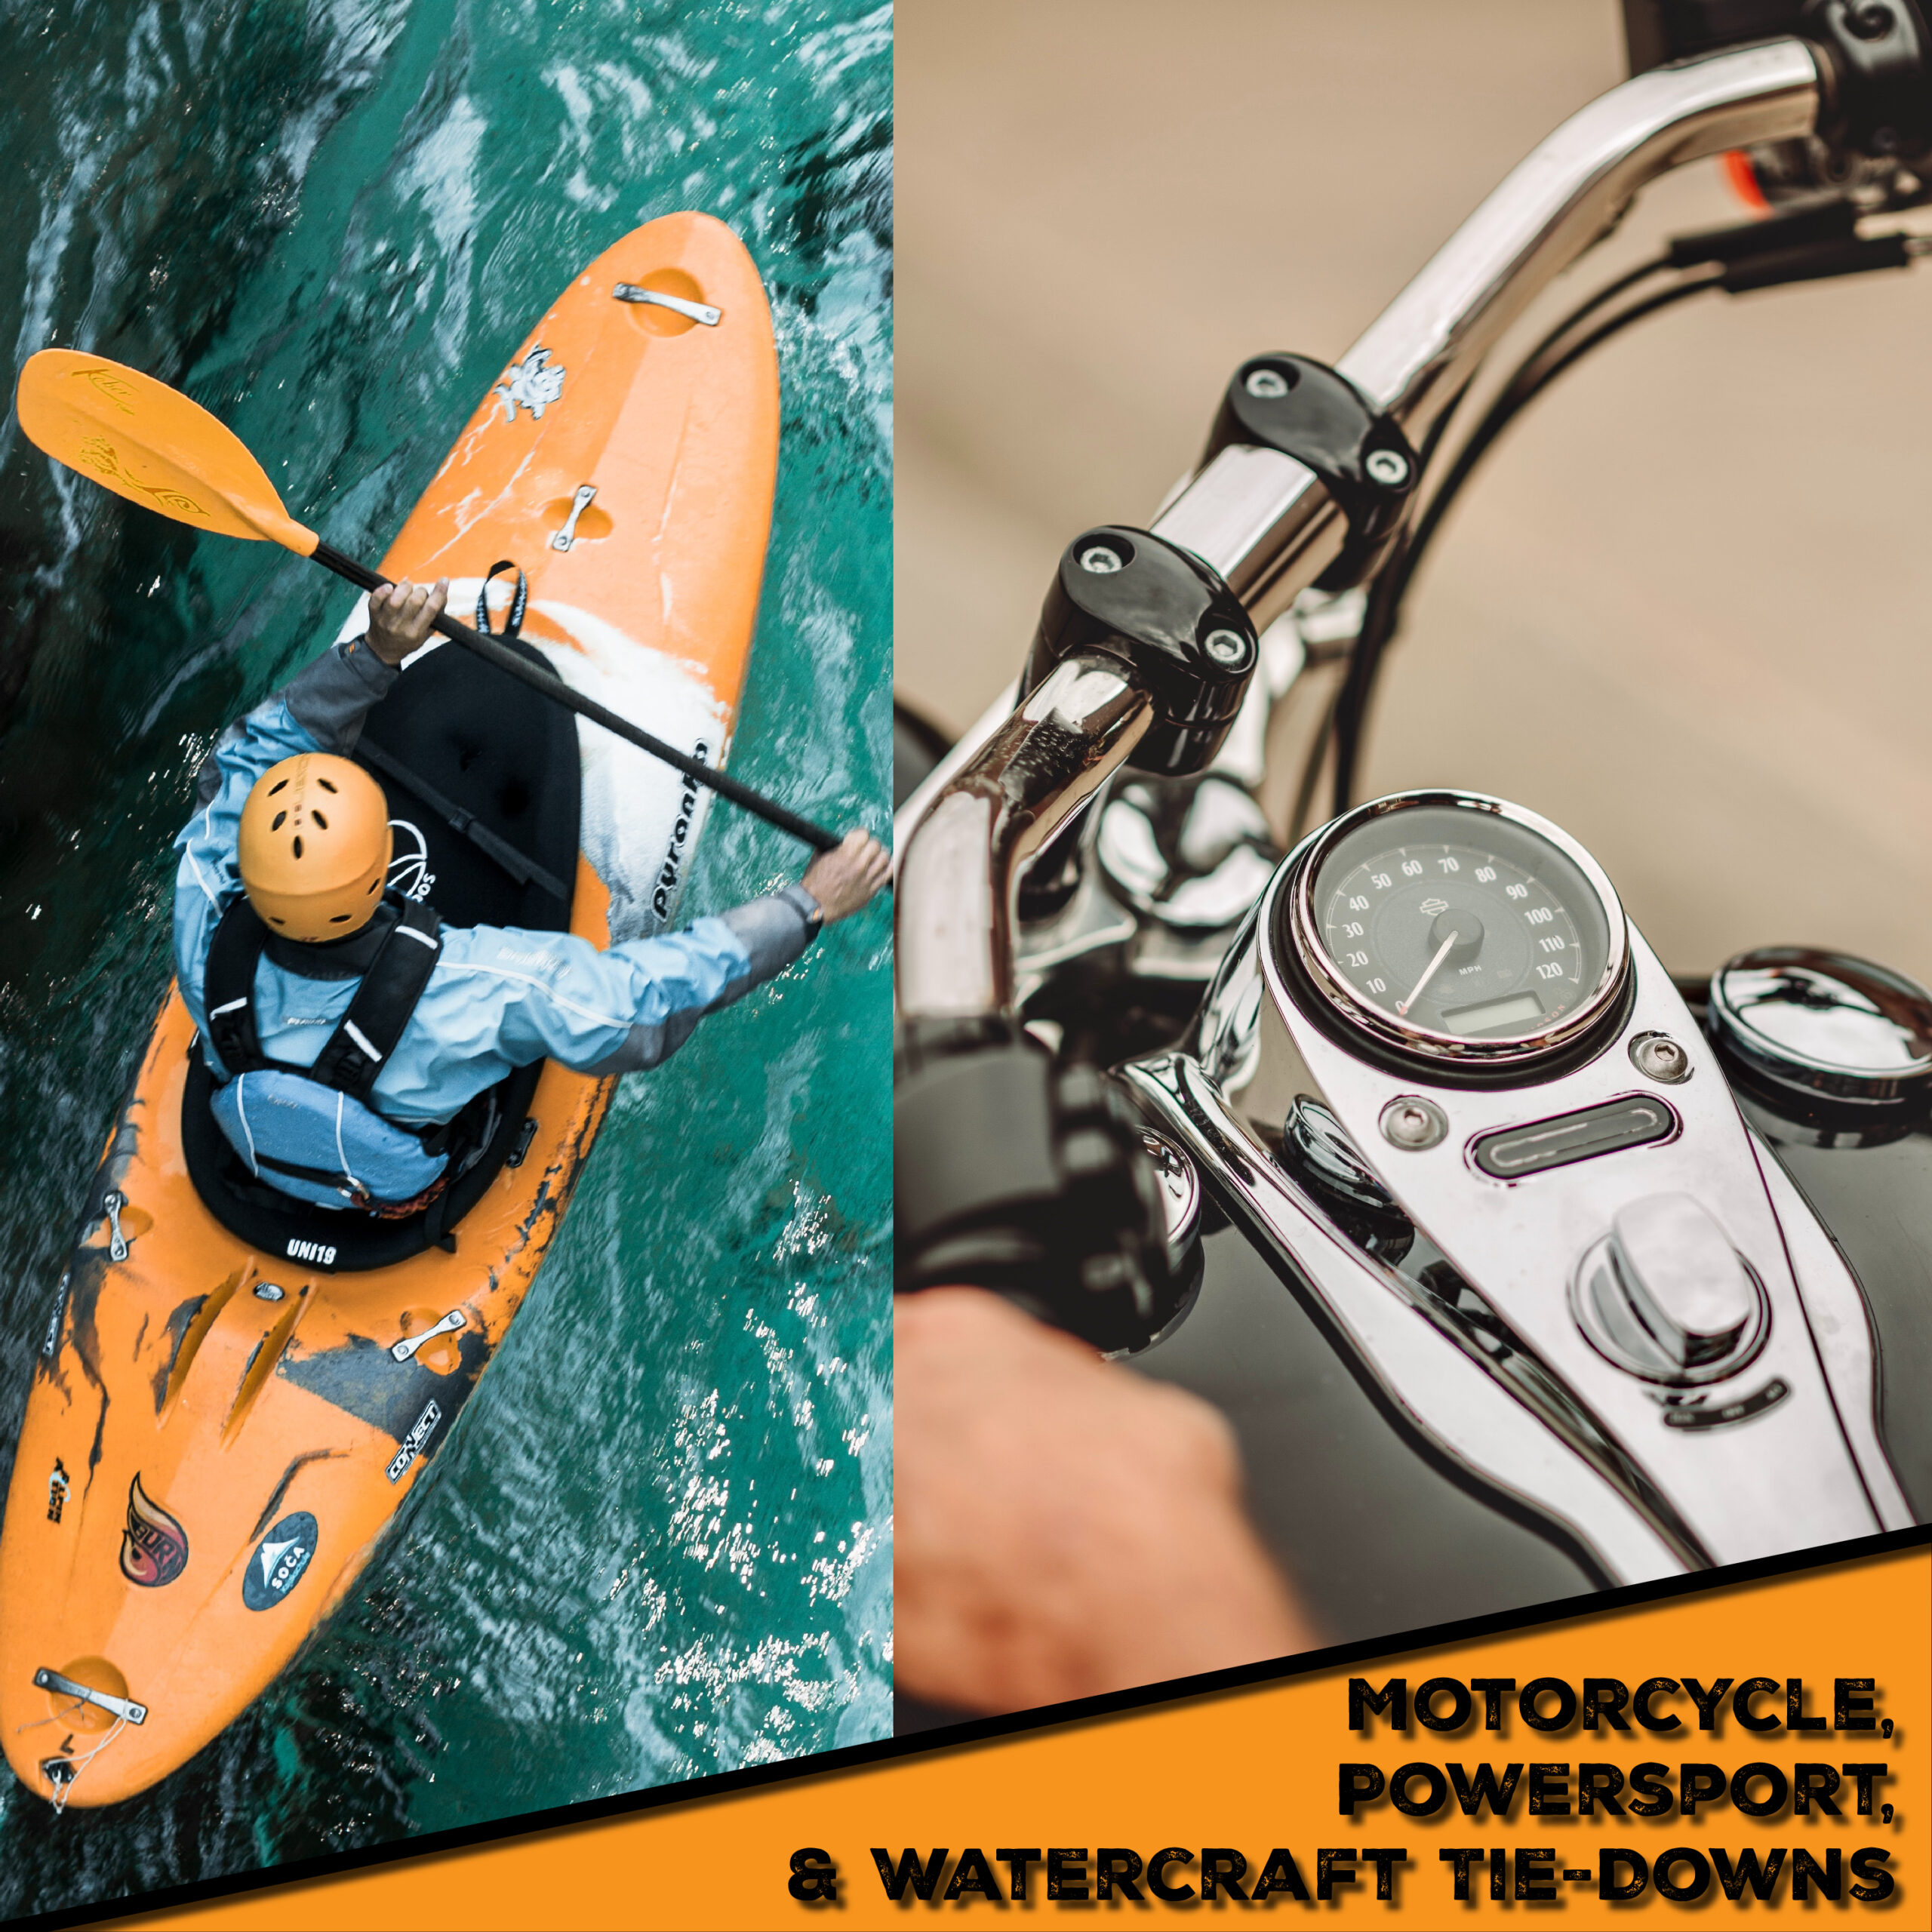 Motocycle, Powersport, Watercraft Tie-Downs